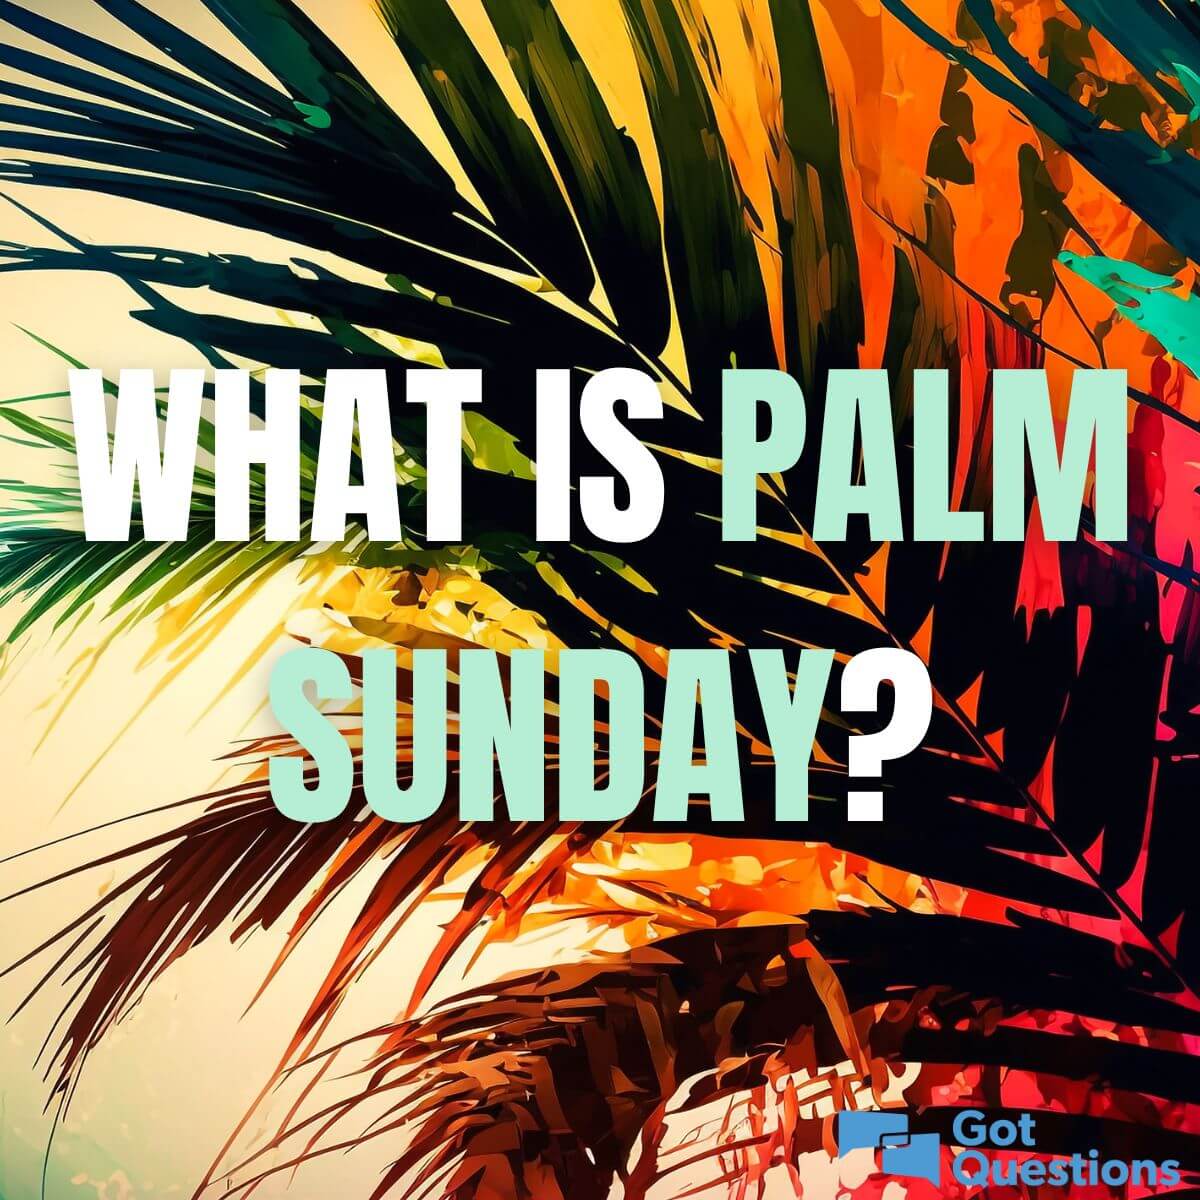 30 Palm Sunday Scripture 2023 - Palm Sunday Bible Verses Verses